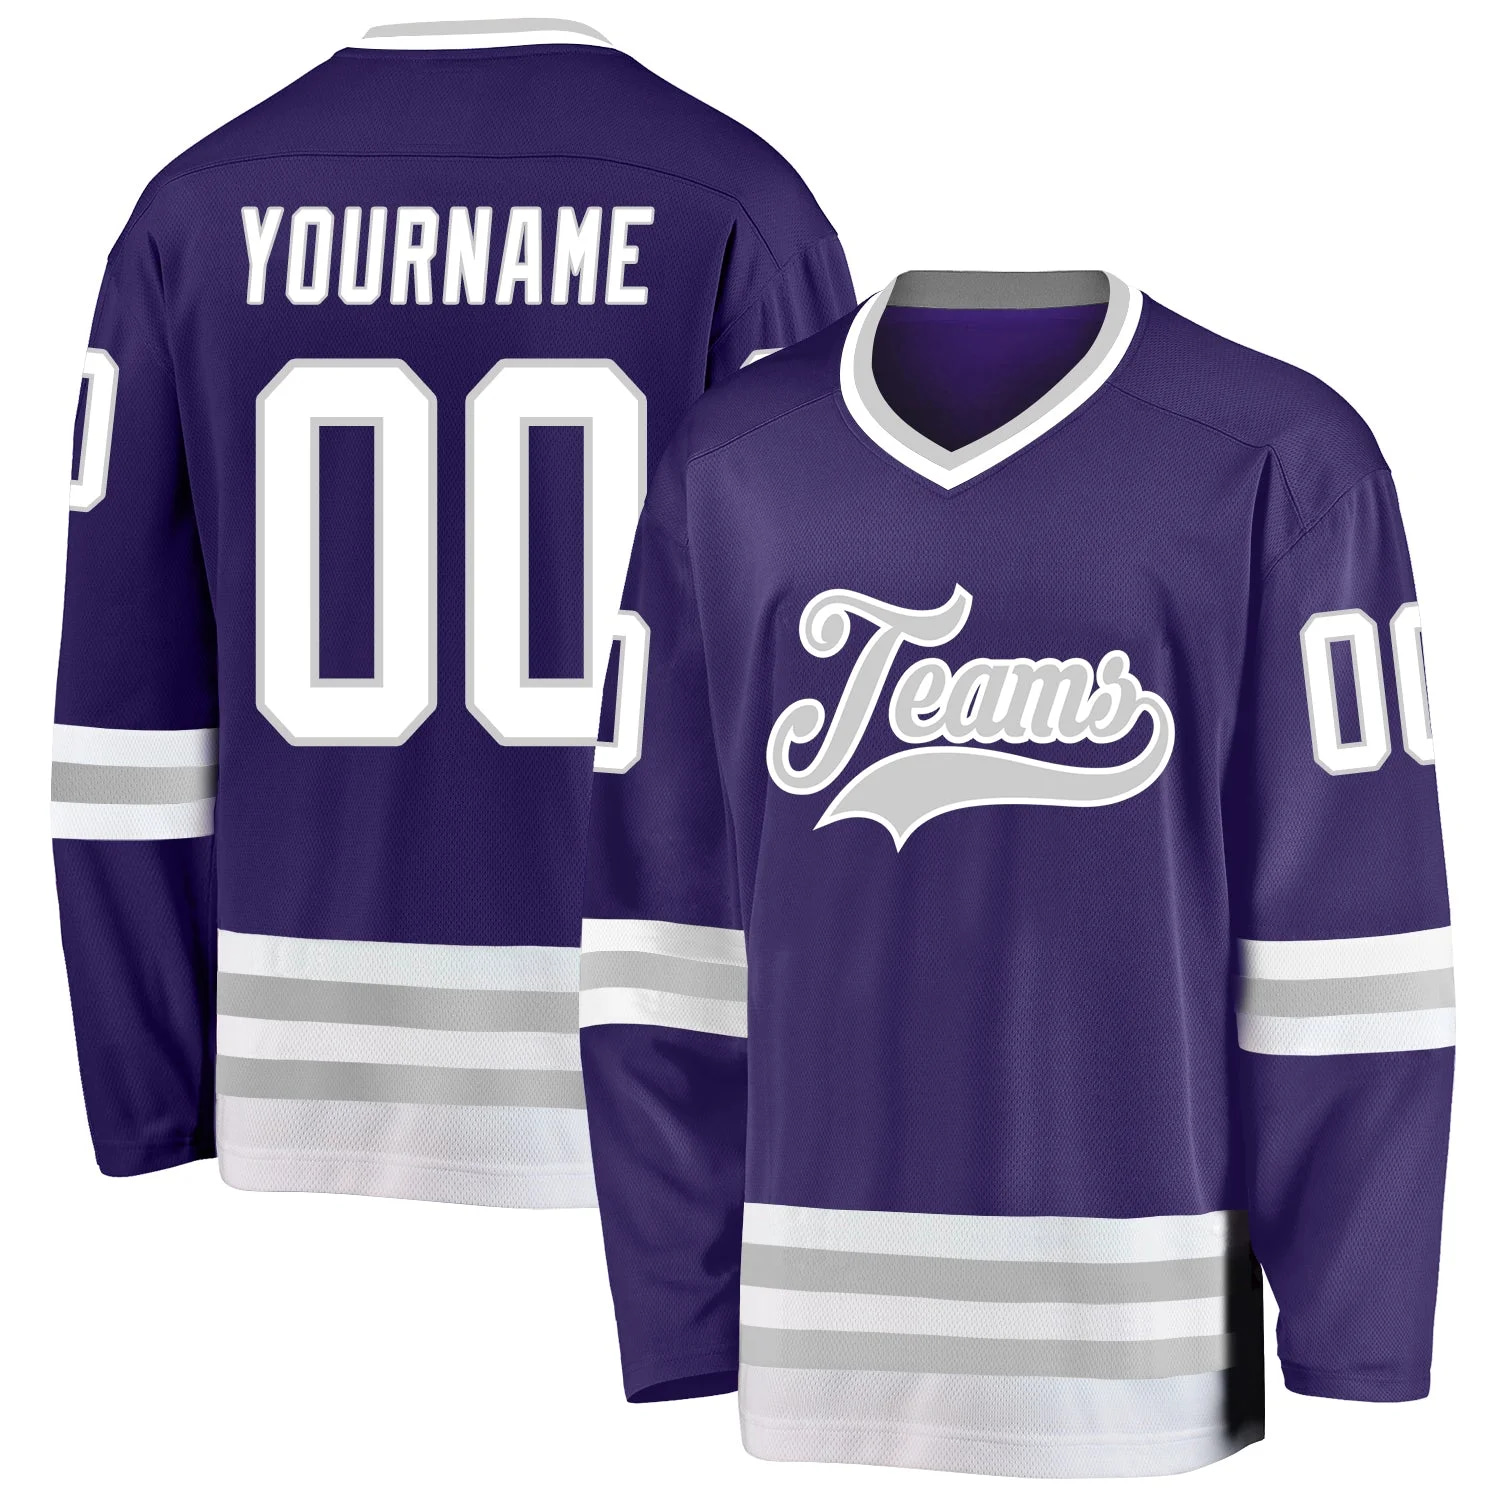 Stitched And Print Purple White-gray Hockey Jersey Custom